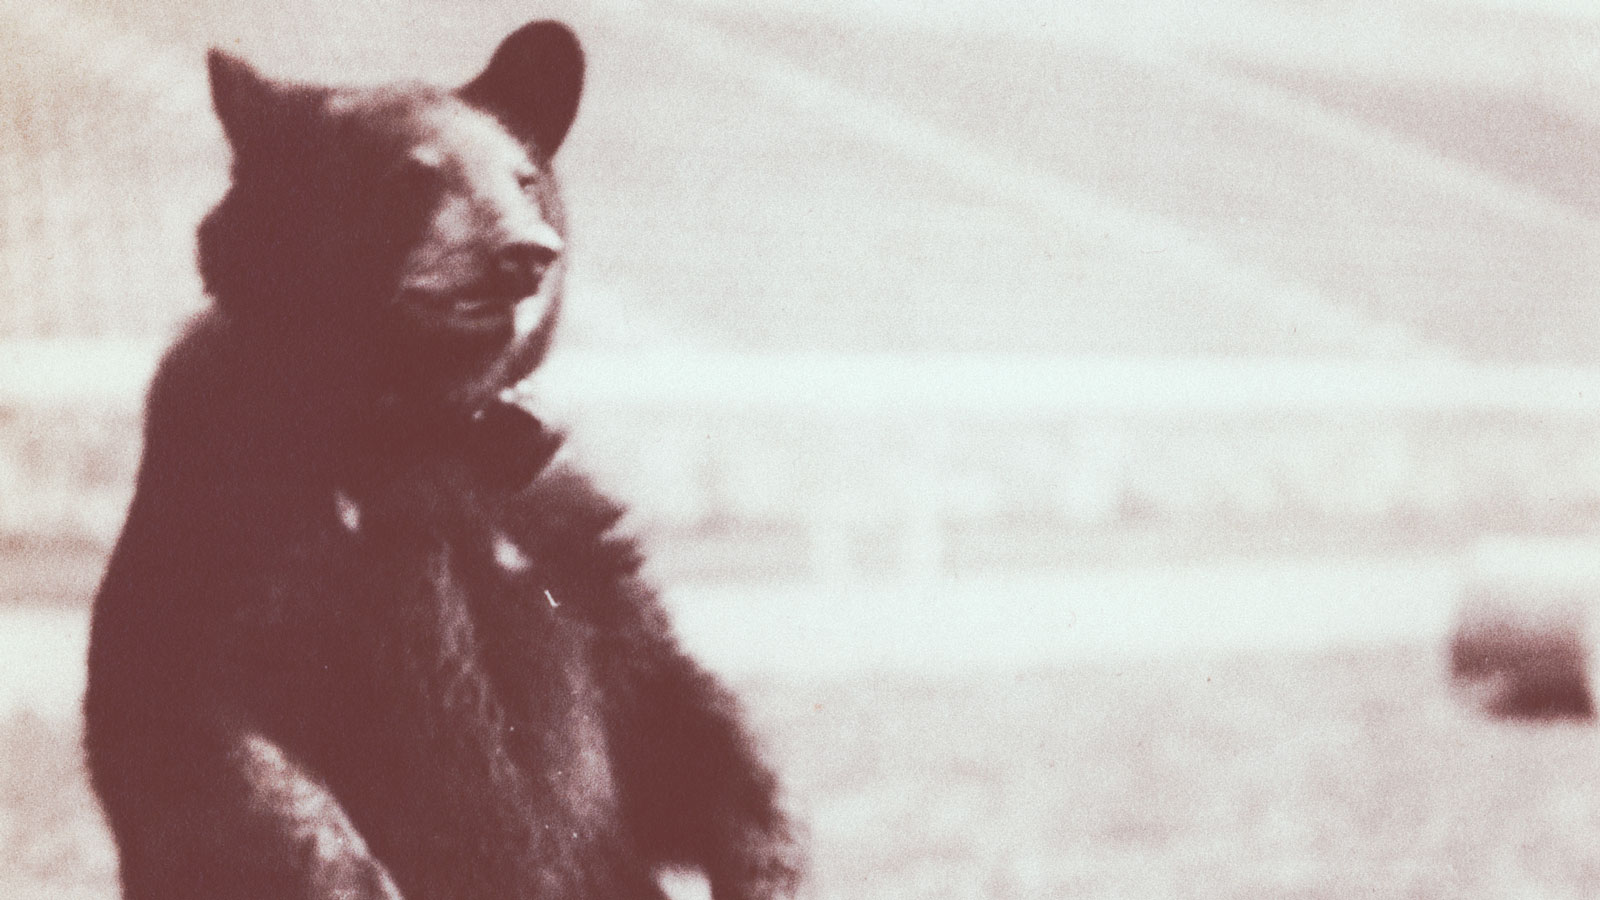 Touchdown I, Cornell's first live bear mascot